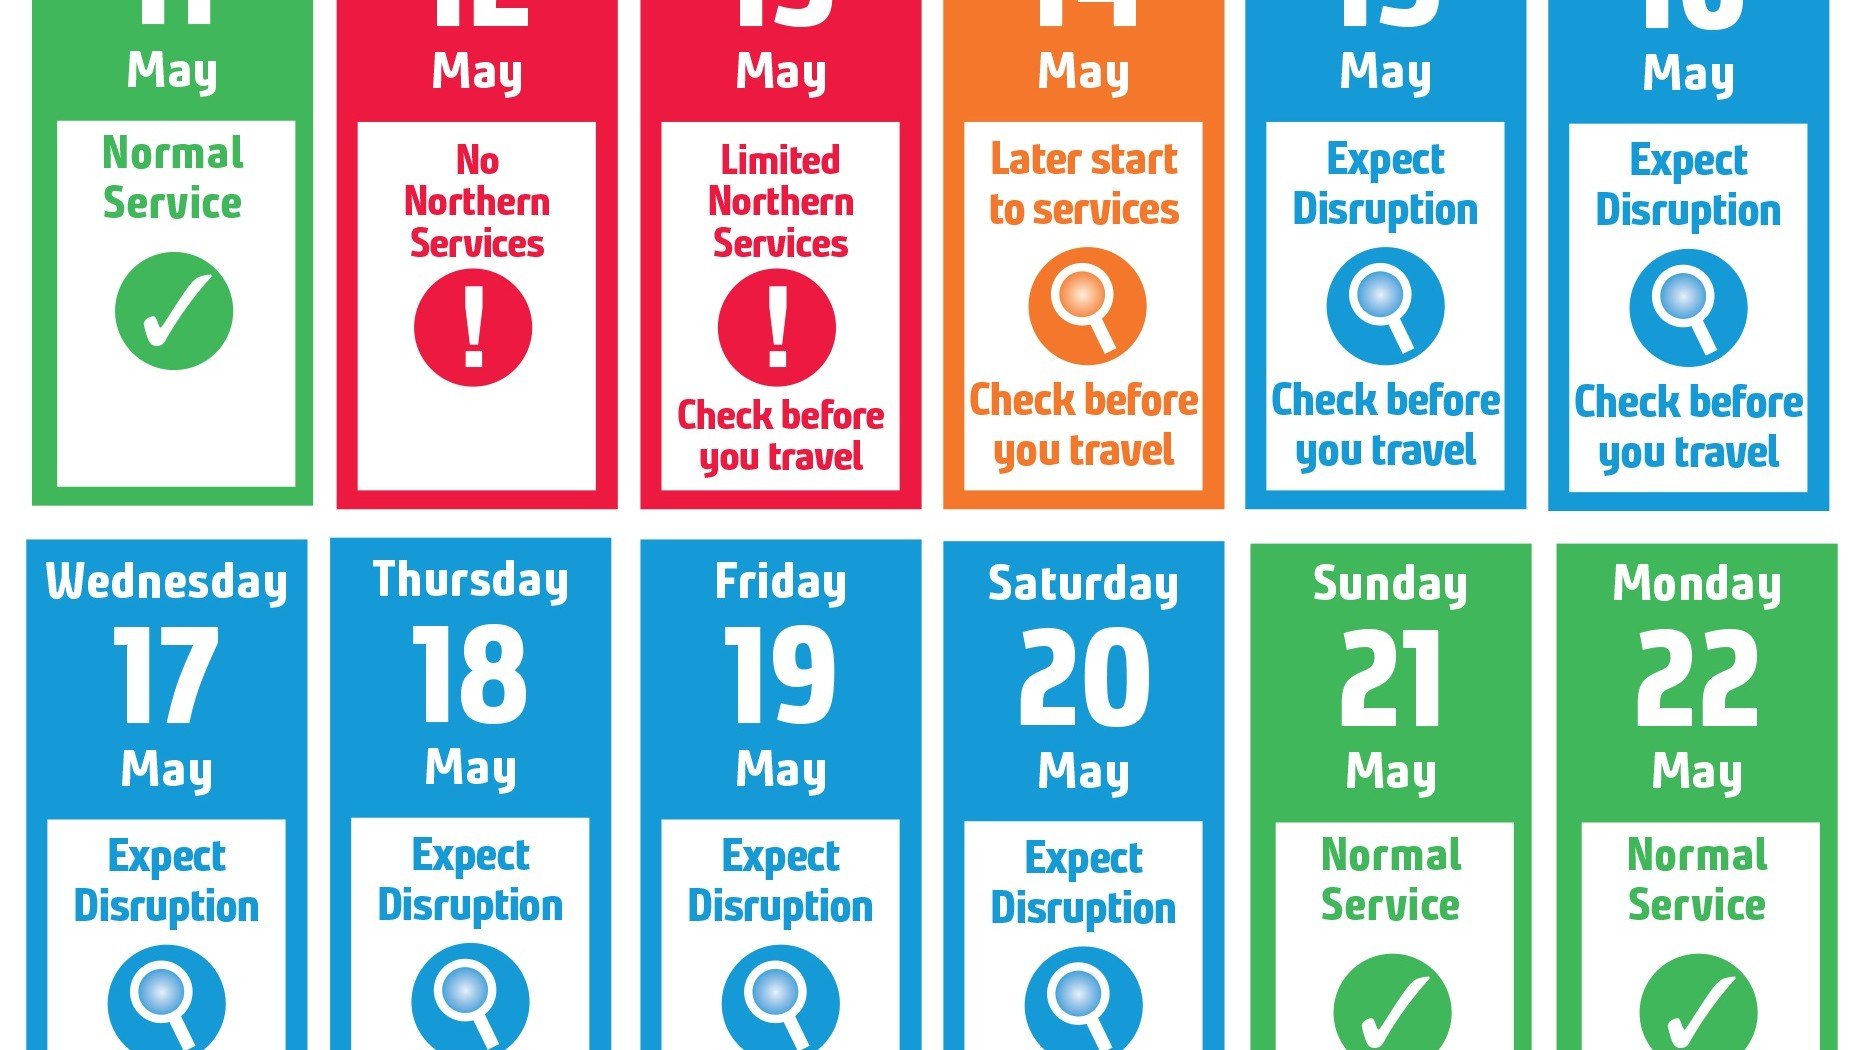 Travel advice calendar - May 2023 strikes